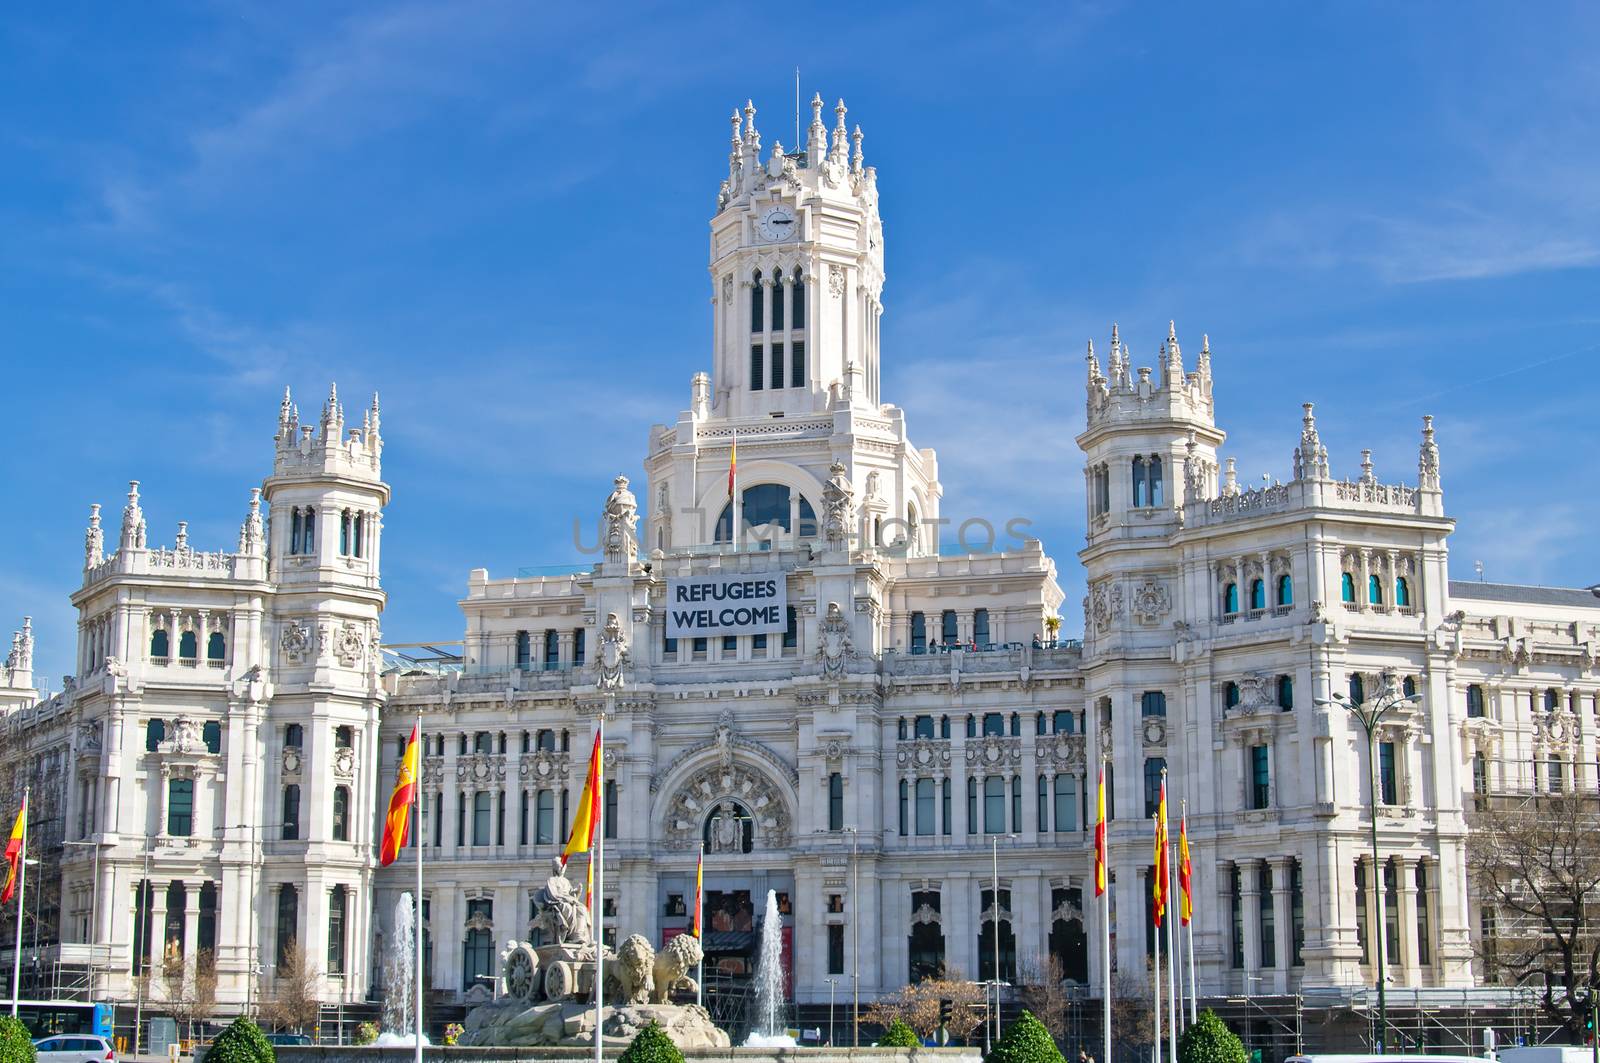 The Cybele Palace (Palacio de Cibeles) on Cybele square (Plaza de Cibeles) in Madrid, Spain